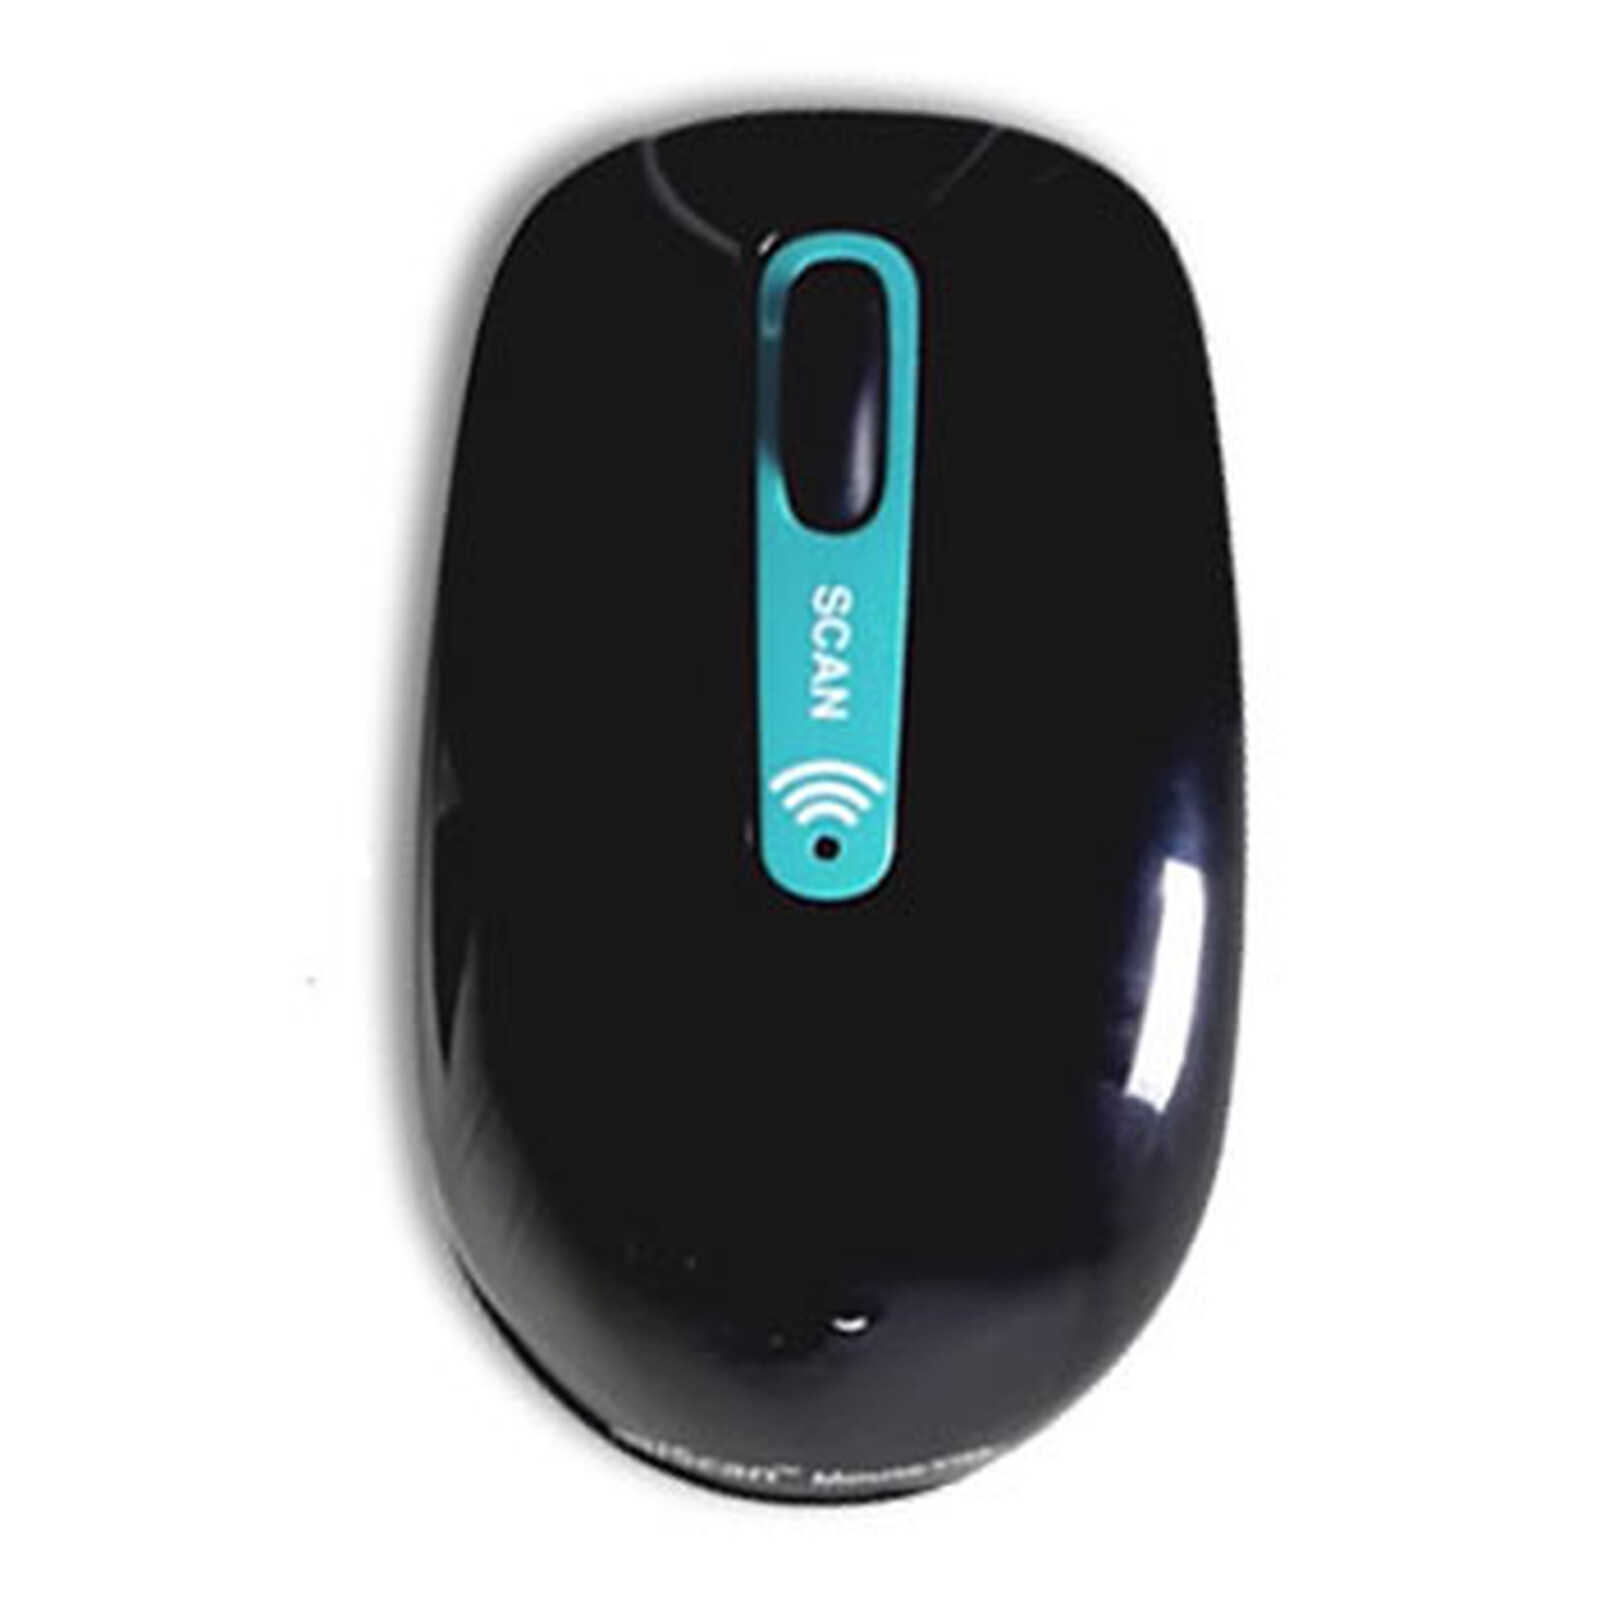 I.R.I.S IRIScan Mouse Wifi - Scanner - Garantie 3 ans LDLC